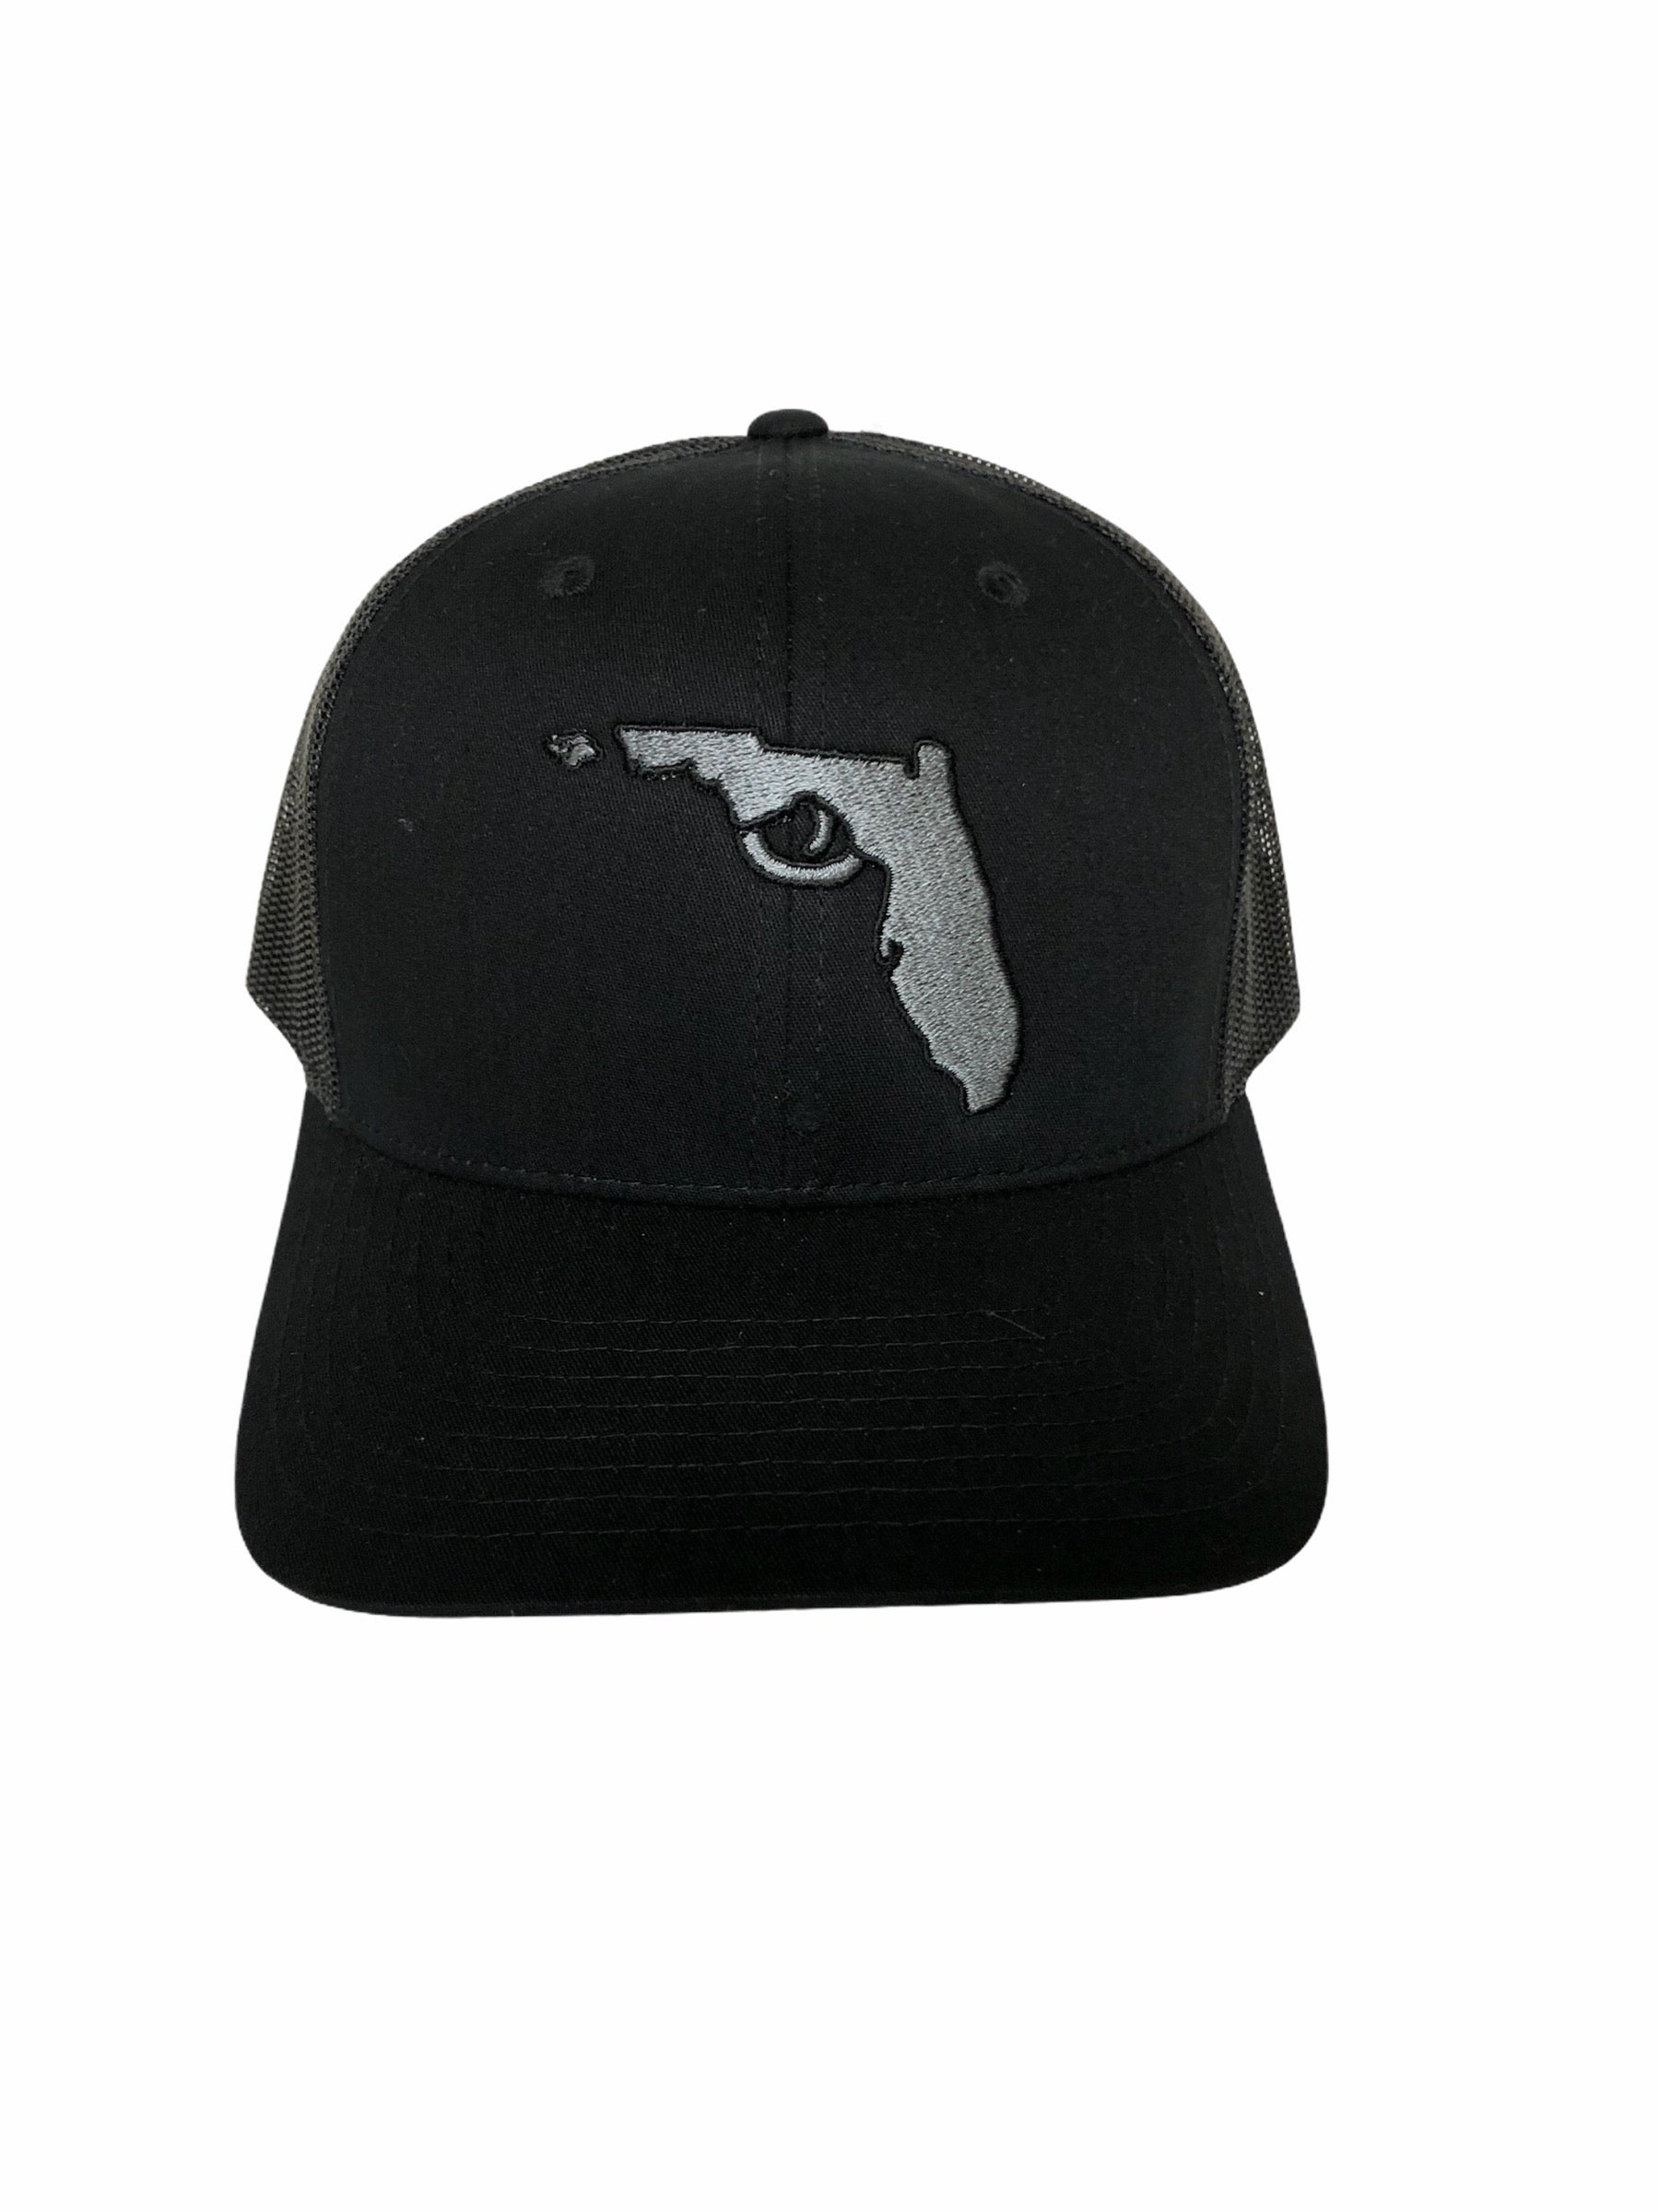 Black & Silver Florida Gun Hat